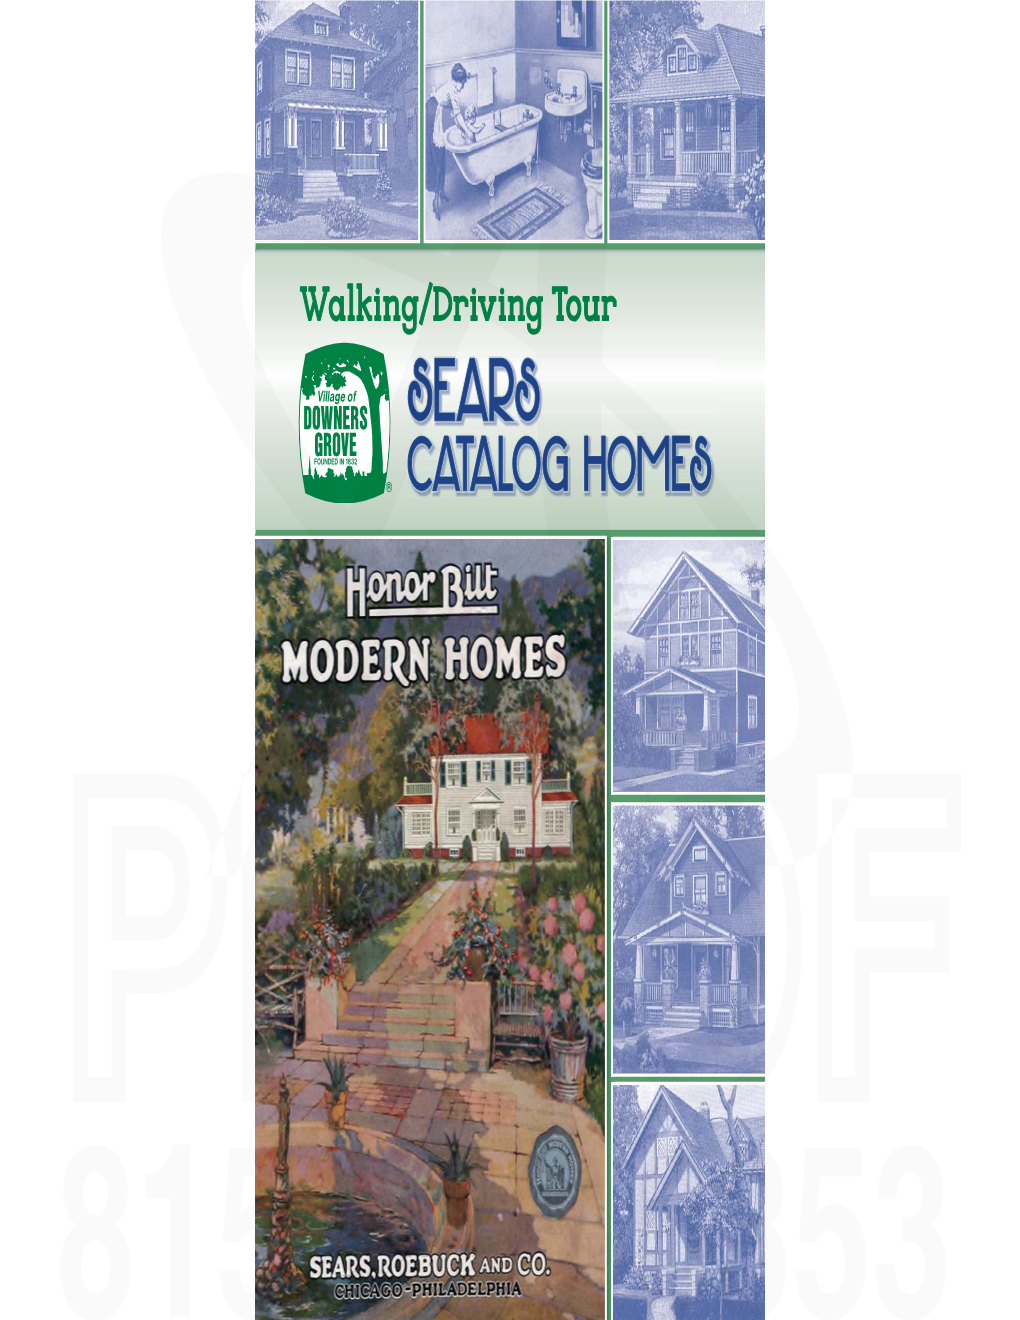 Walking/Driving Tour Sears Catalog Homes